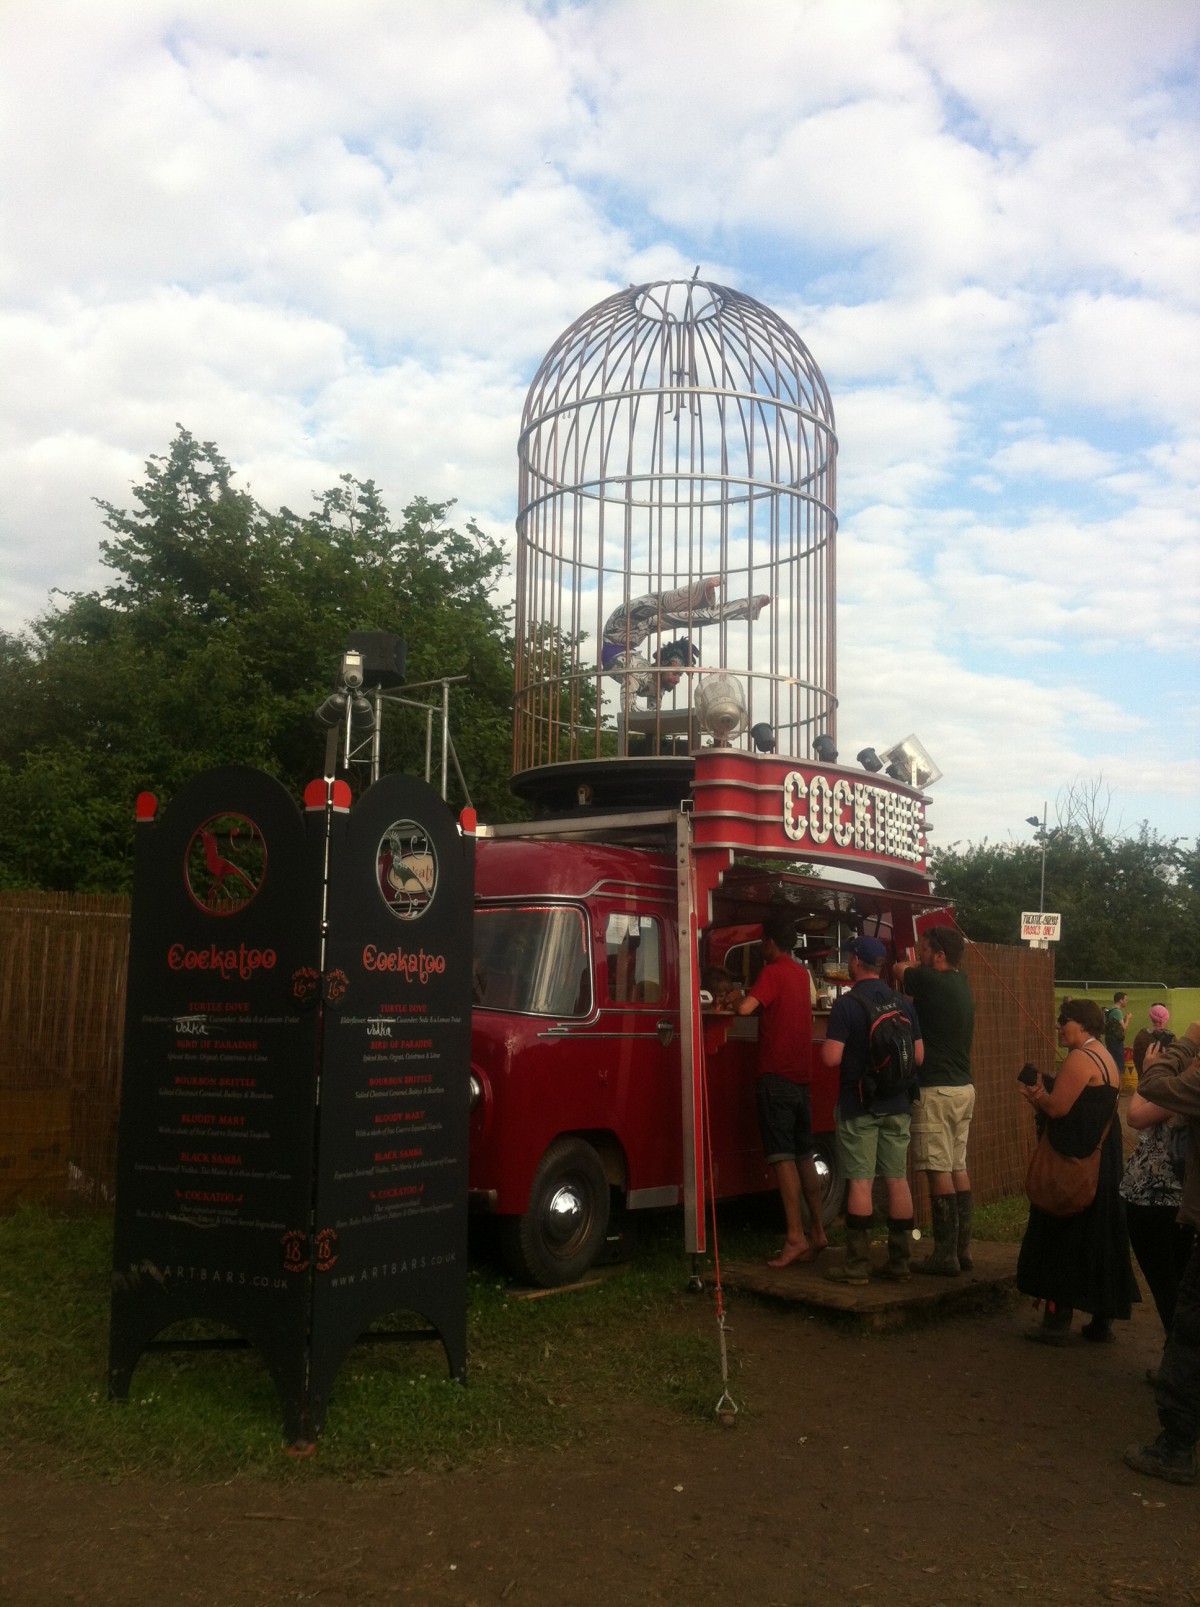 Glastonbury – The UK’s Hidden Circus Festival